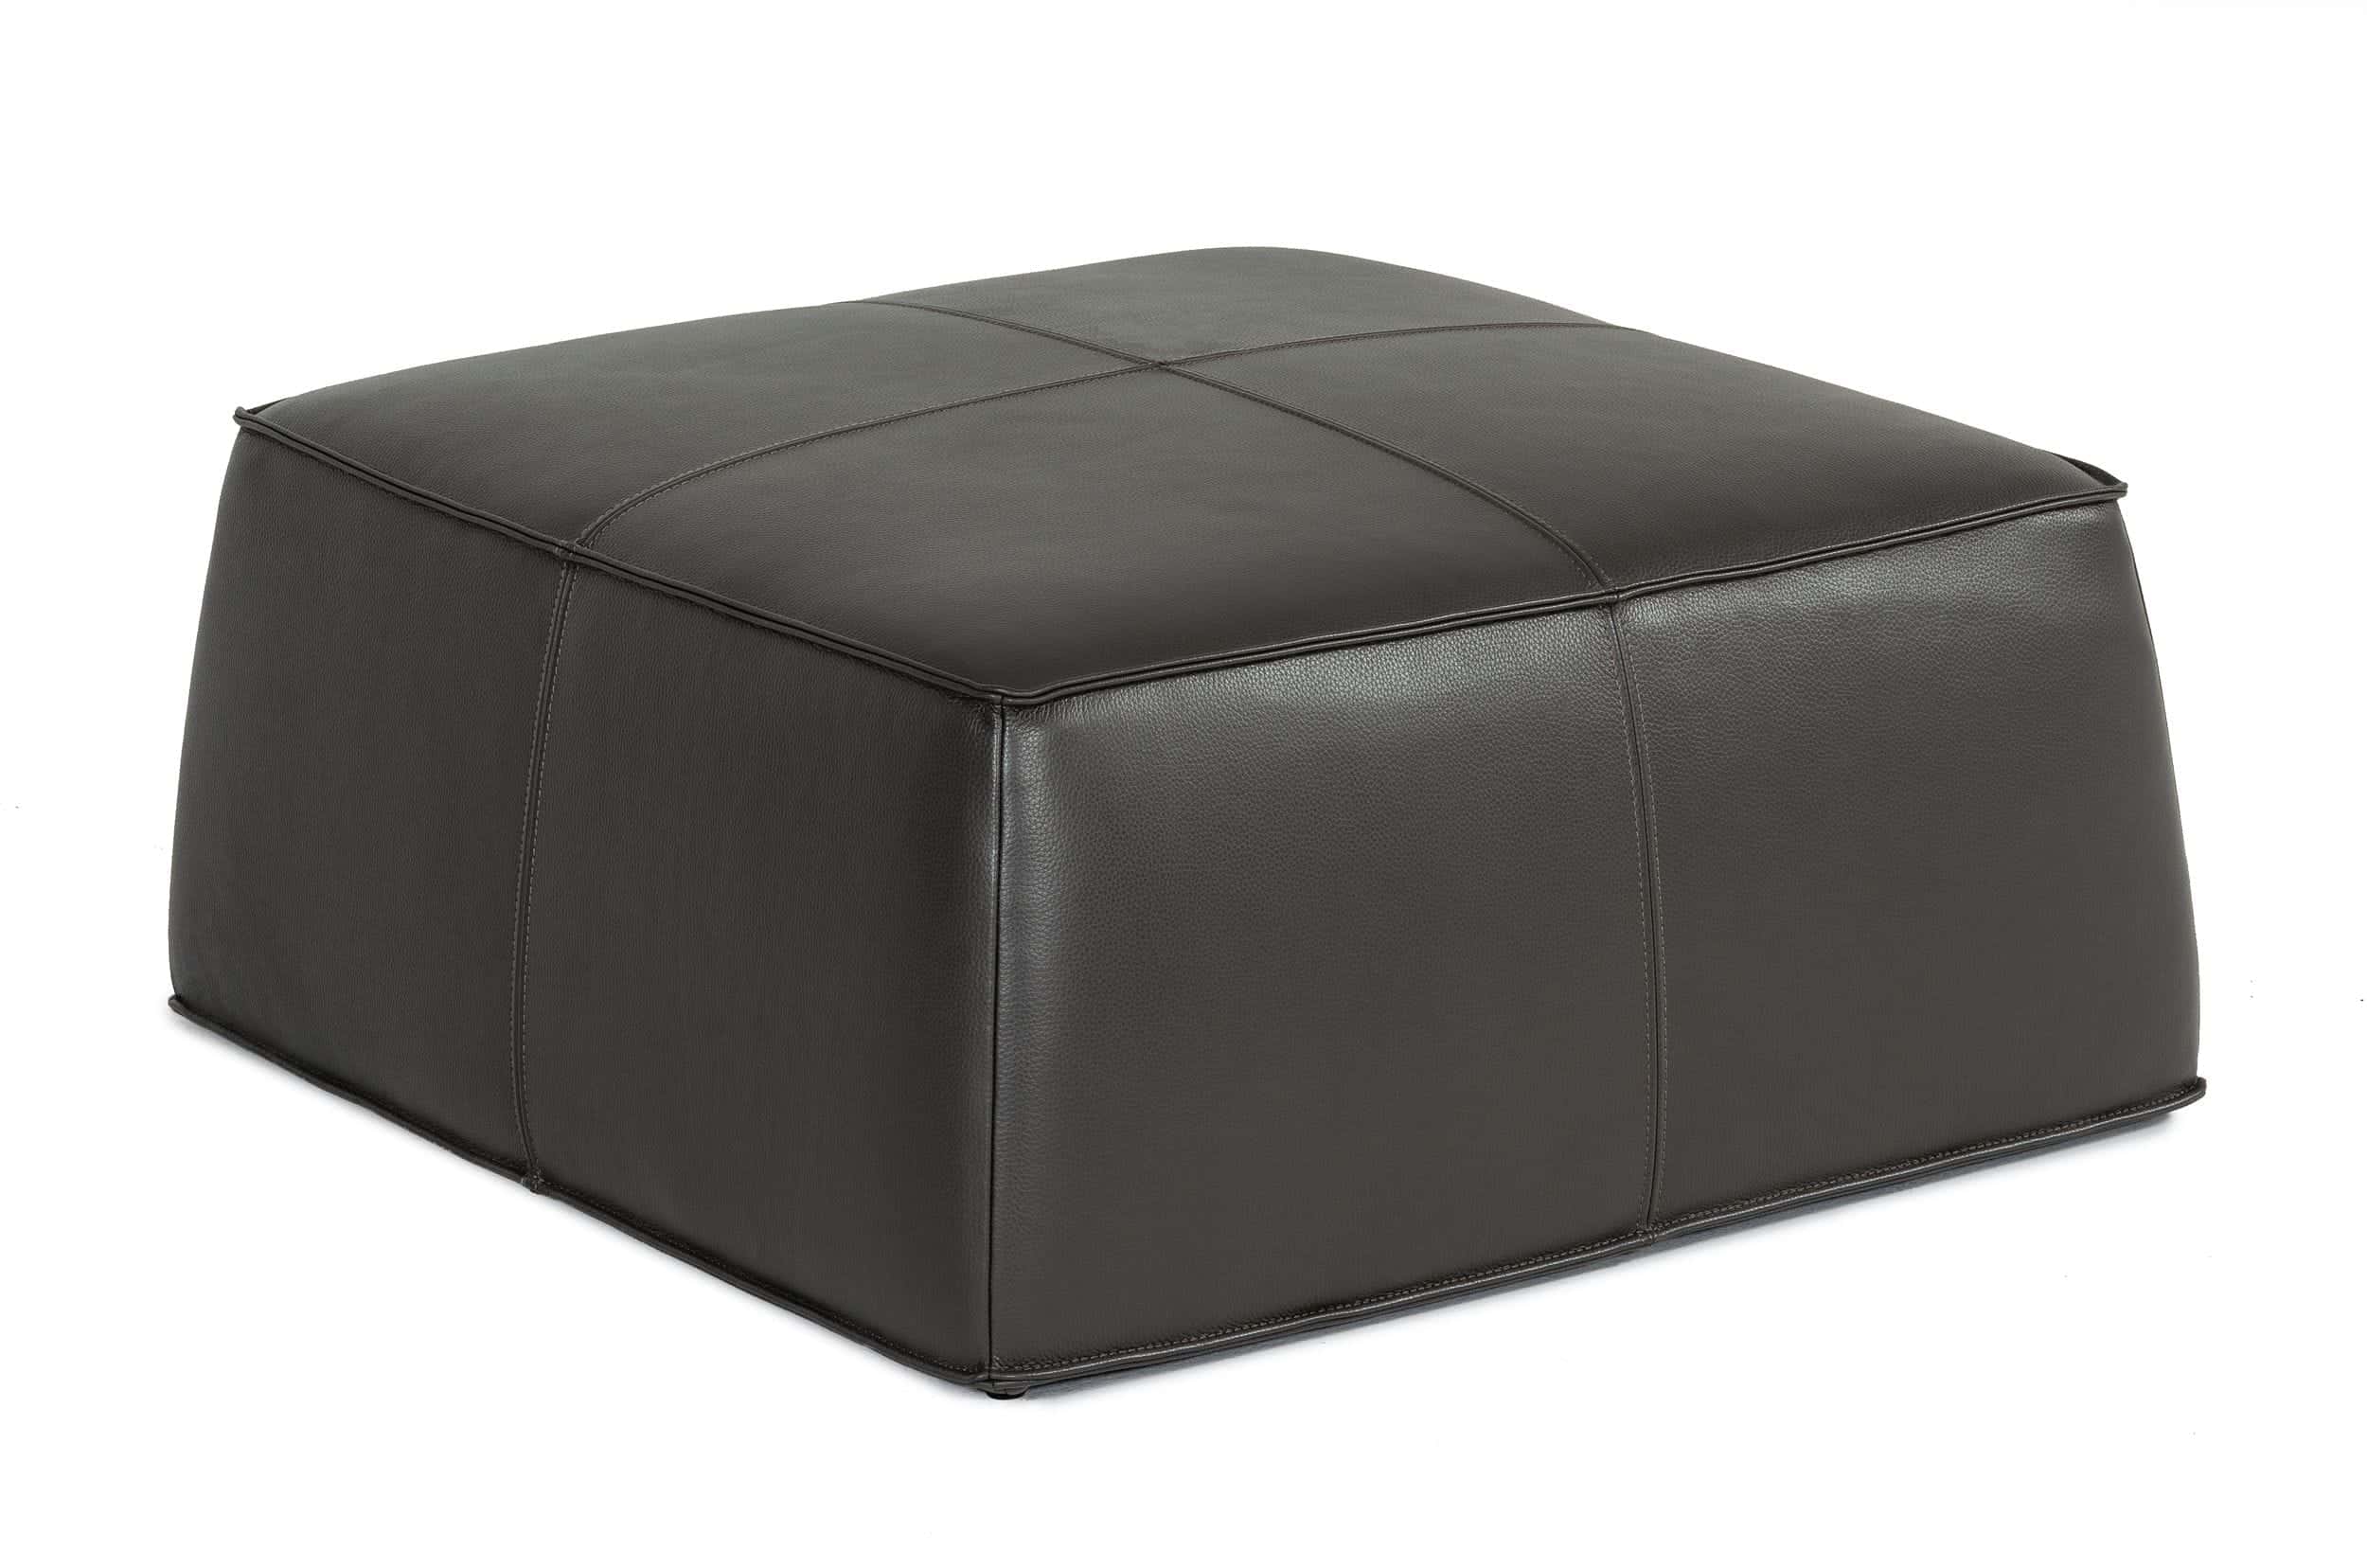 Divani Casa April - Modern Dark Grey Leather Square Ottoman by VIG Furniture